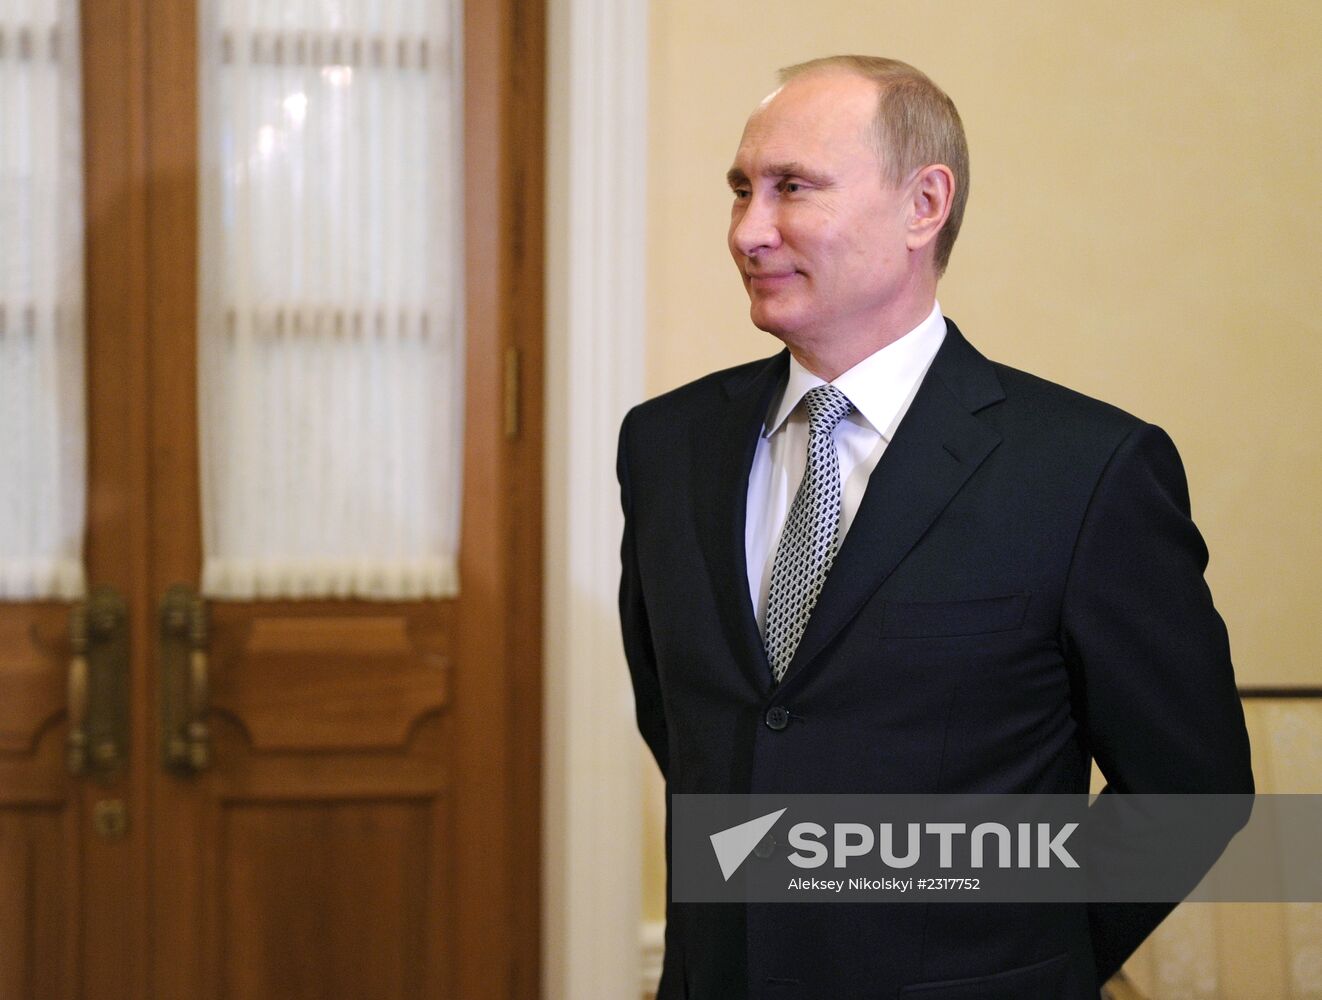 Vladimir Putin's working visit to Urals Federal District